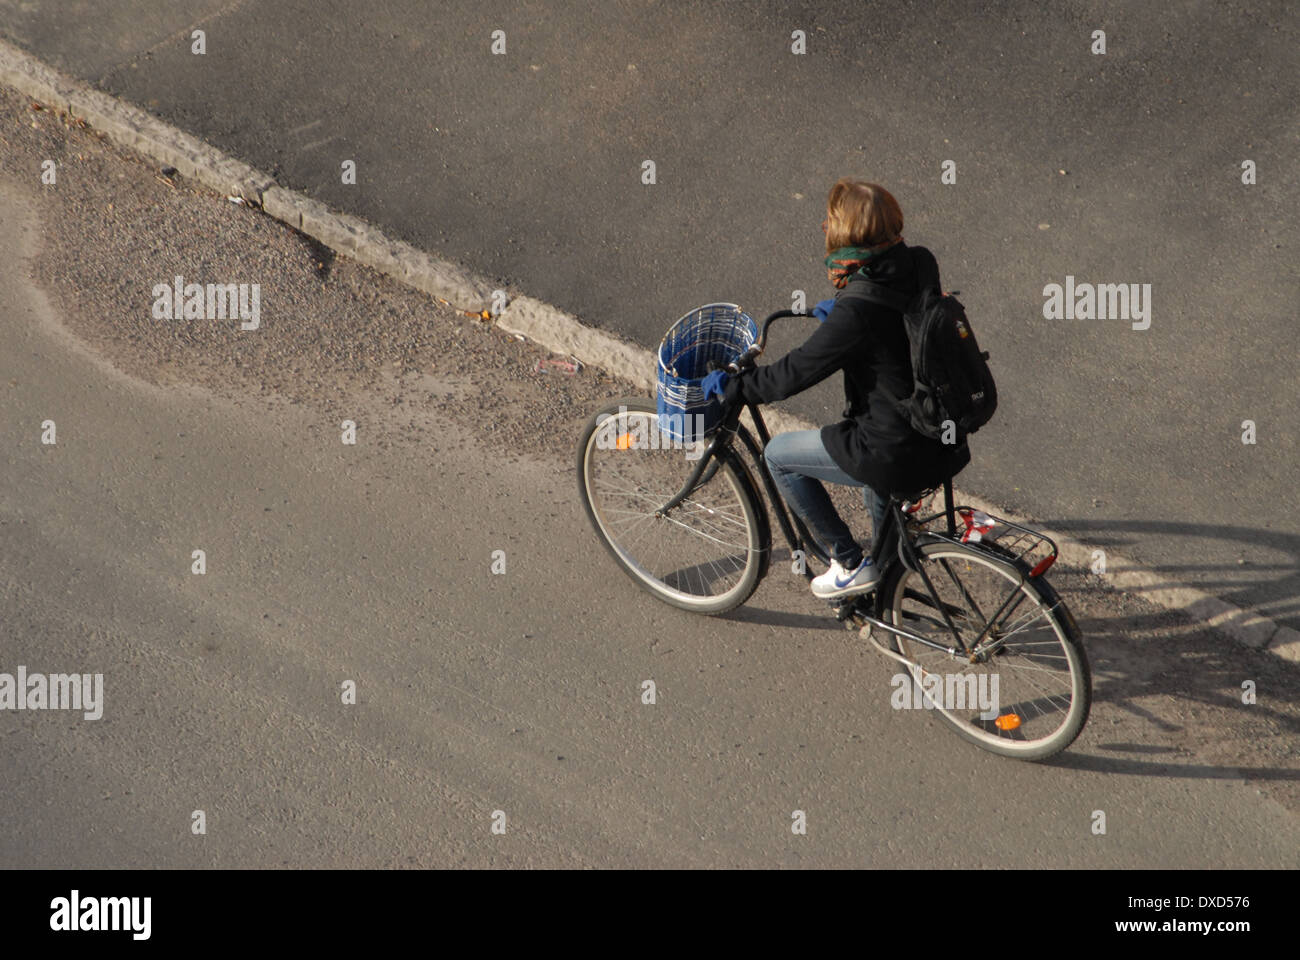 Cyclist, woman riding a bike. Stock Photo